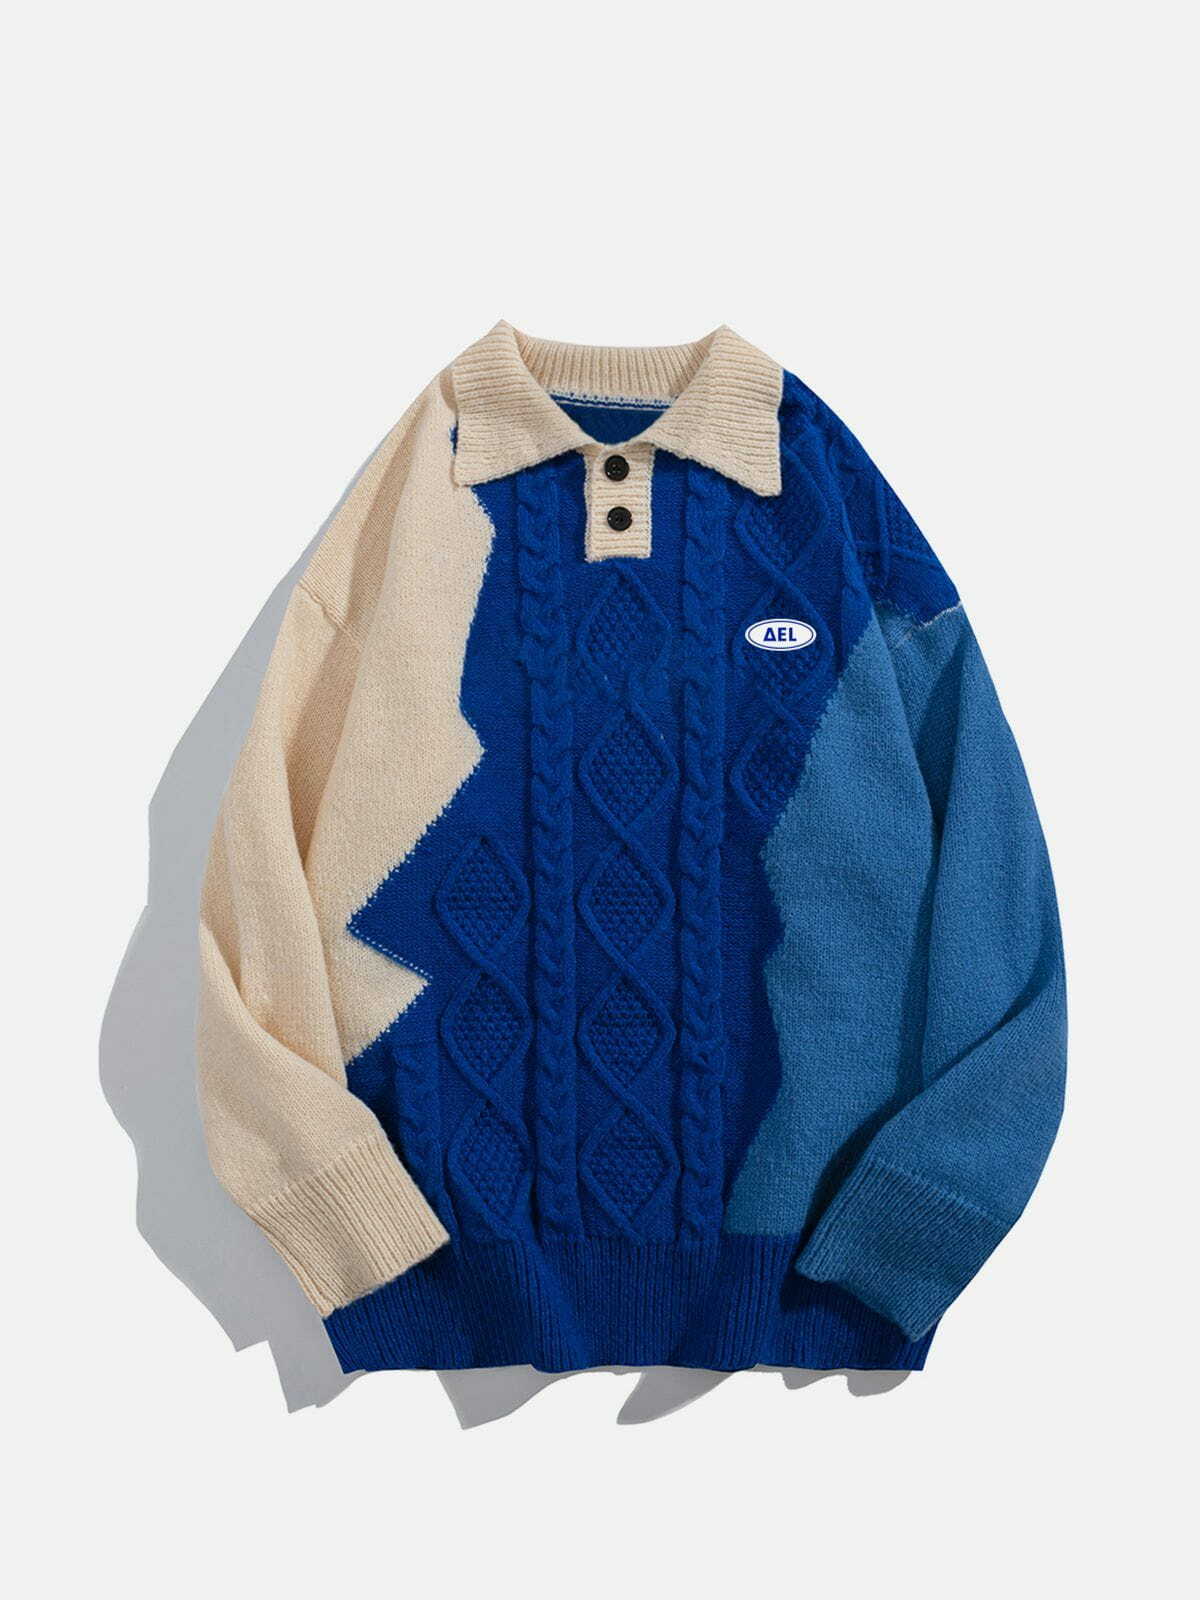 patchwork polo collar sweater edgy urban y2k fashion 6400